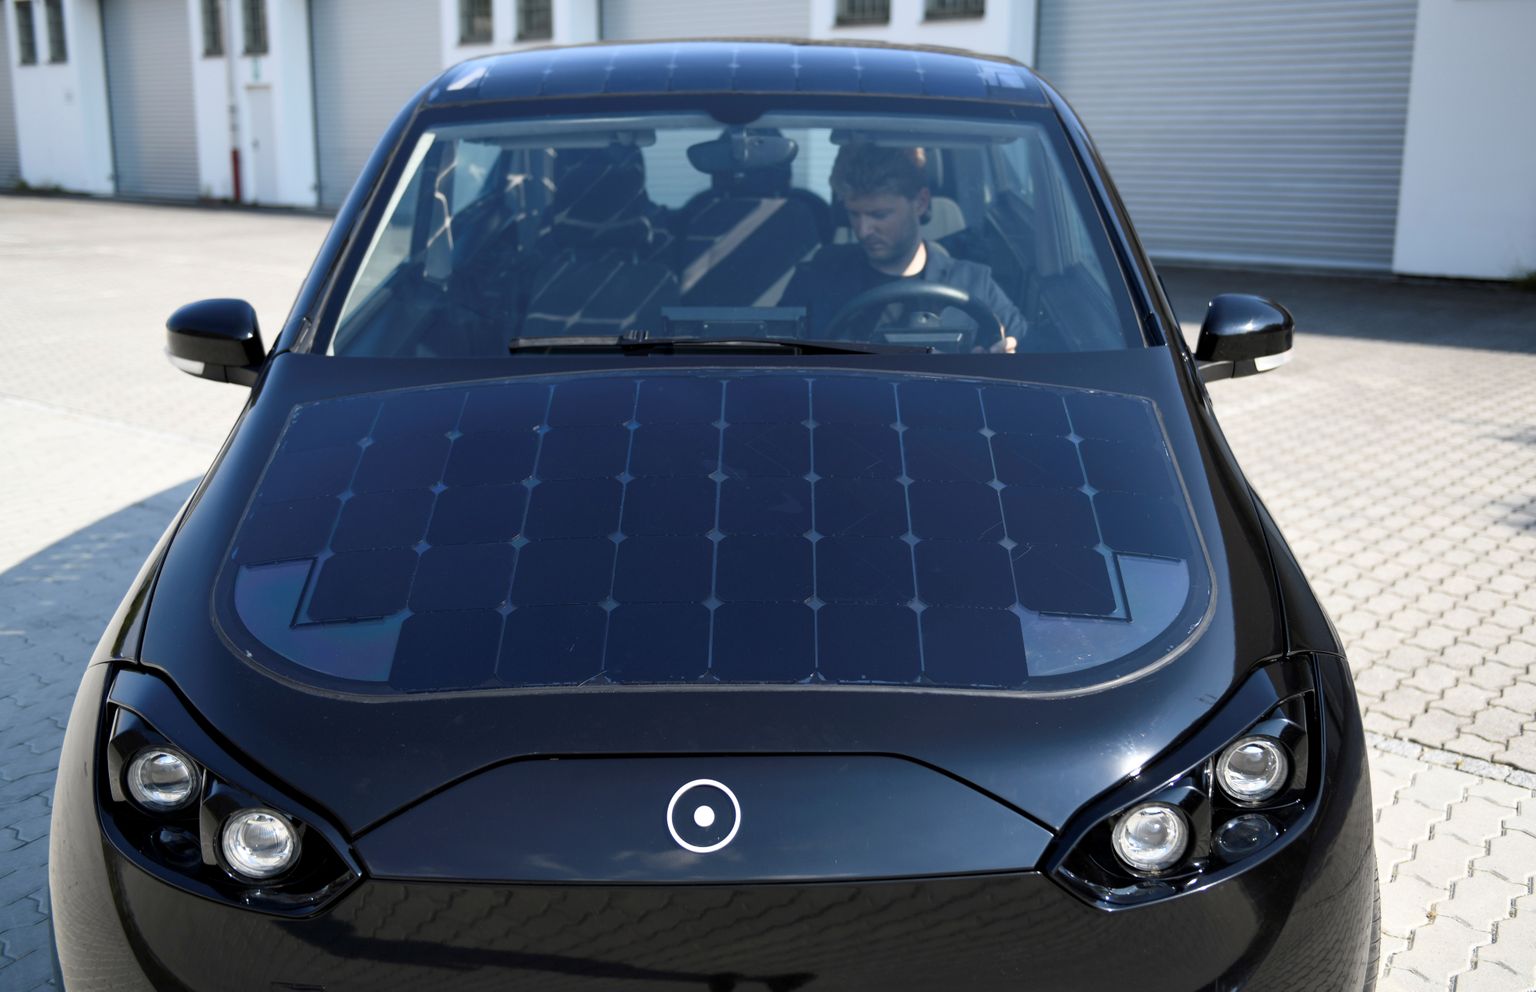 Sono Motorsi kaasasutaja Jona Christians päikesepaneeliauto roolis